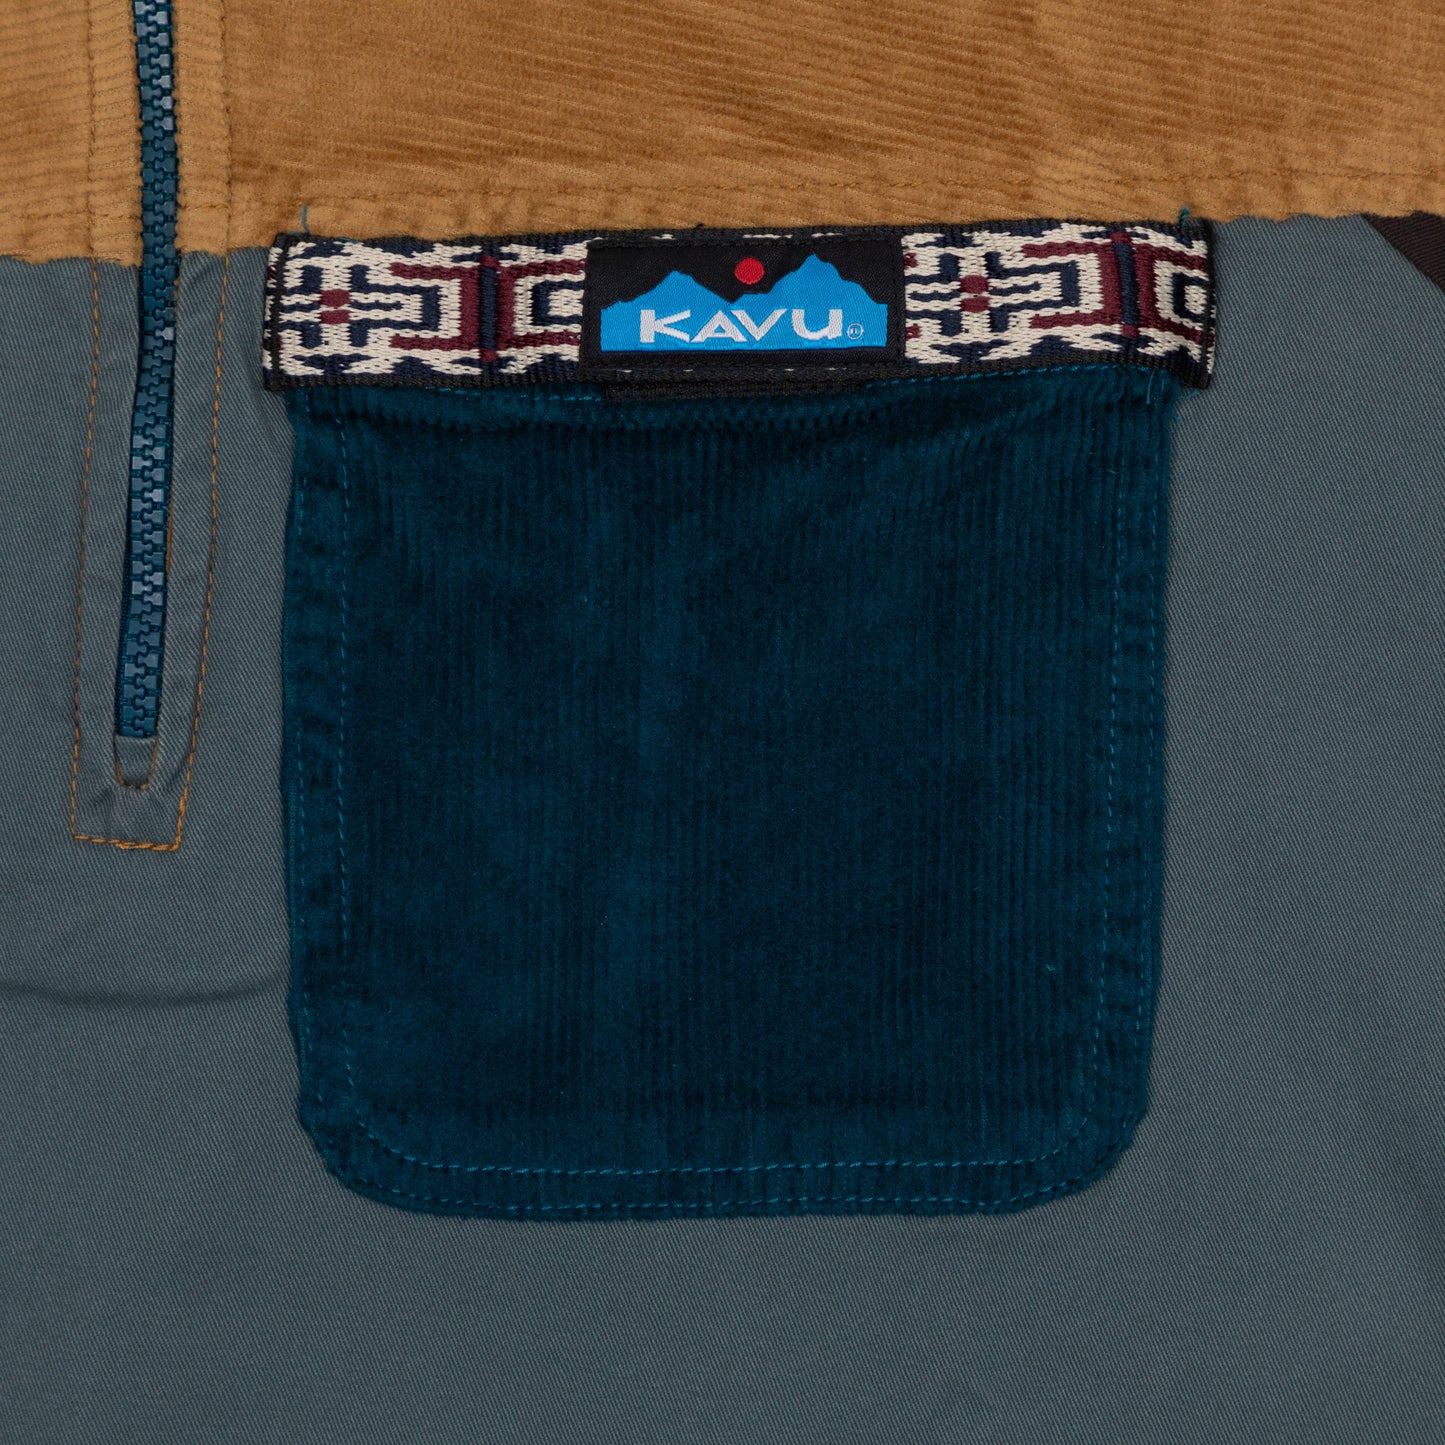 KAVU Throwshirt Flex Corduroy Fleece in YELLOW & BLUE